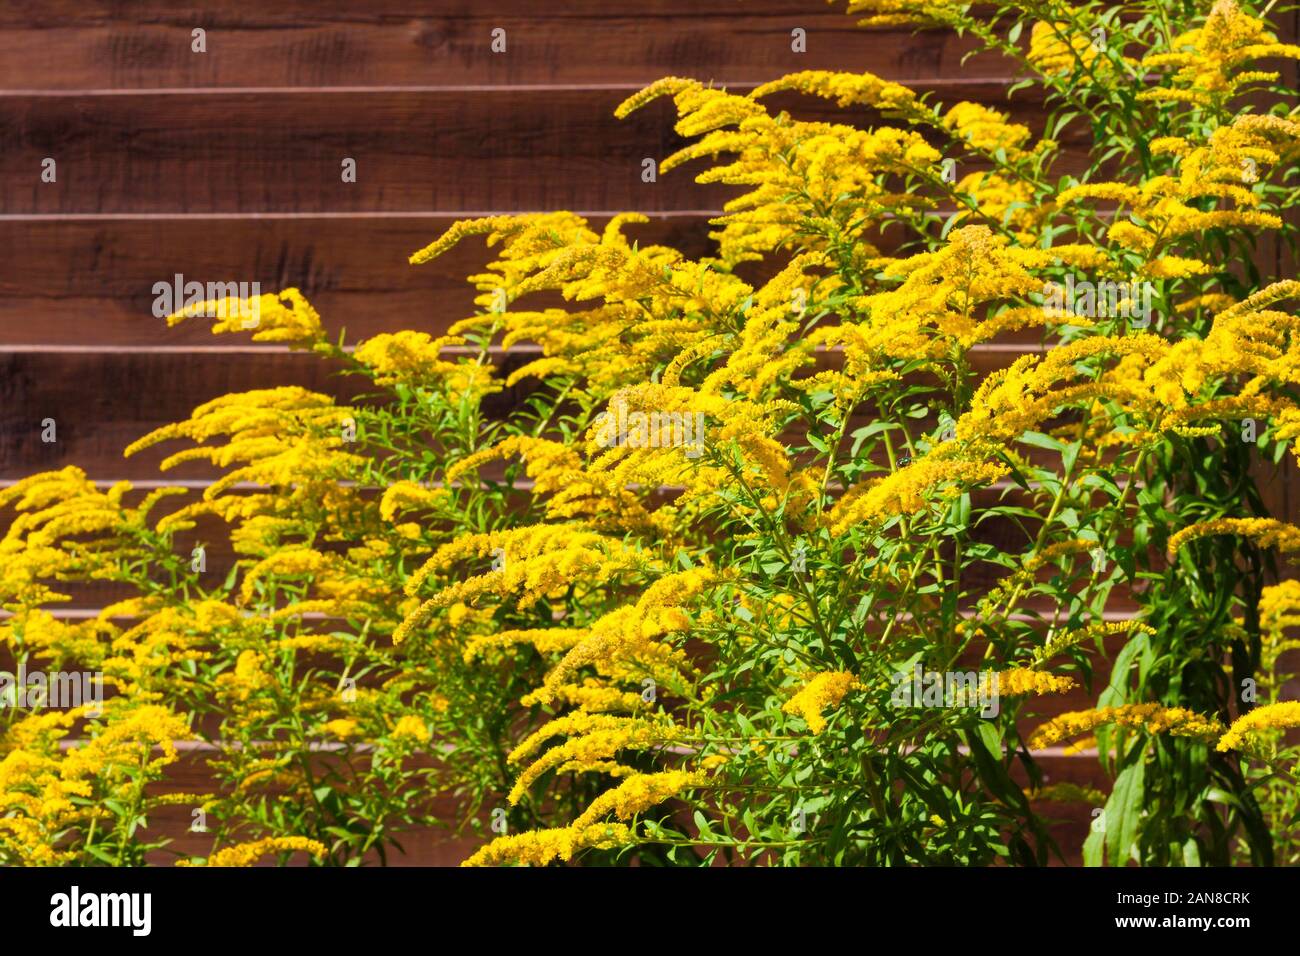 Blooming Canadian Houghton (Solidago canadensis) sur fond marron clôture en bois Banque D'Images